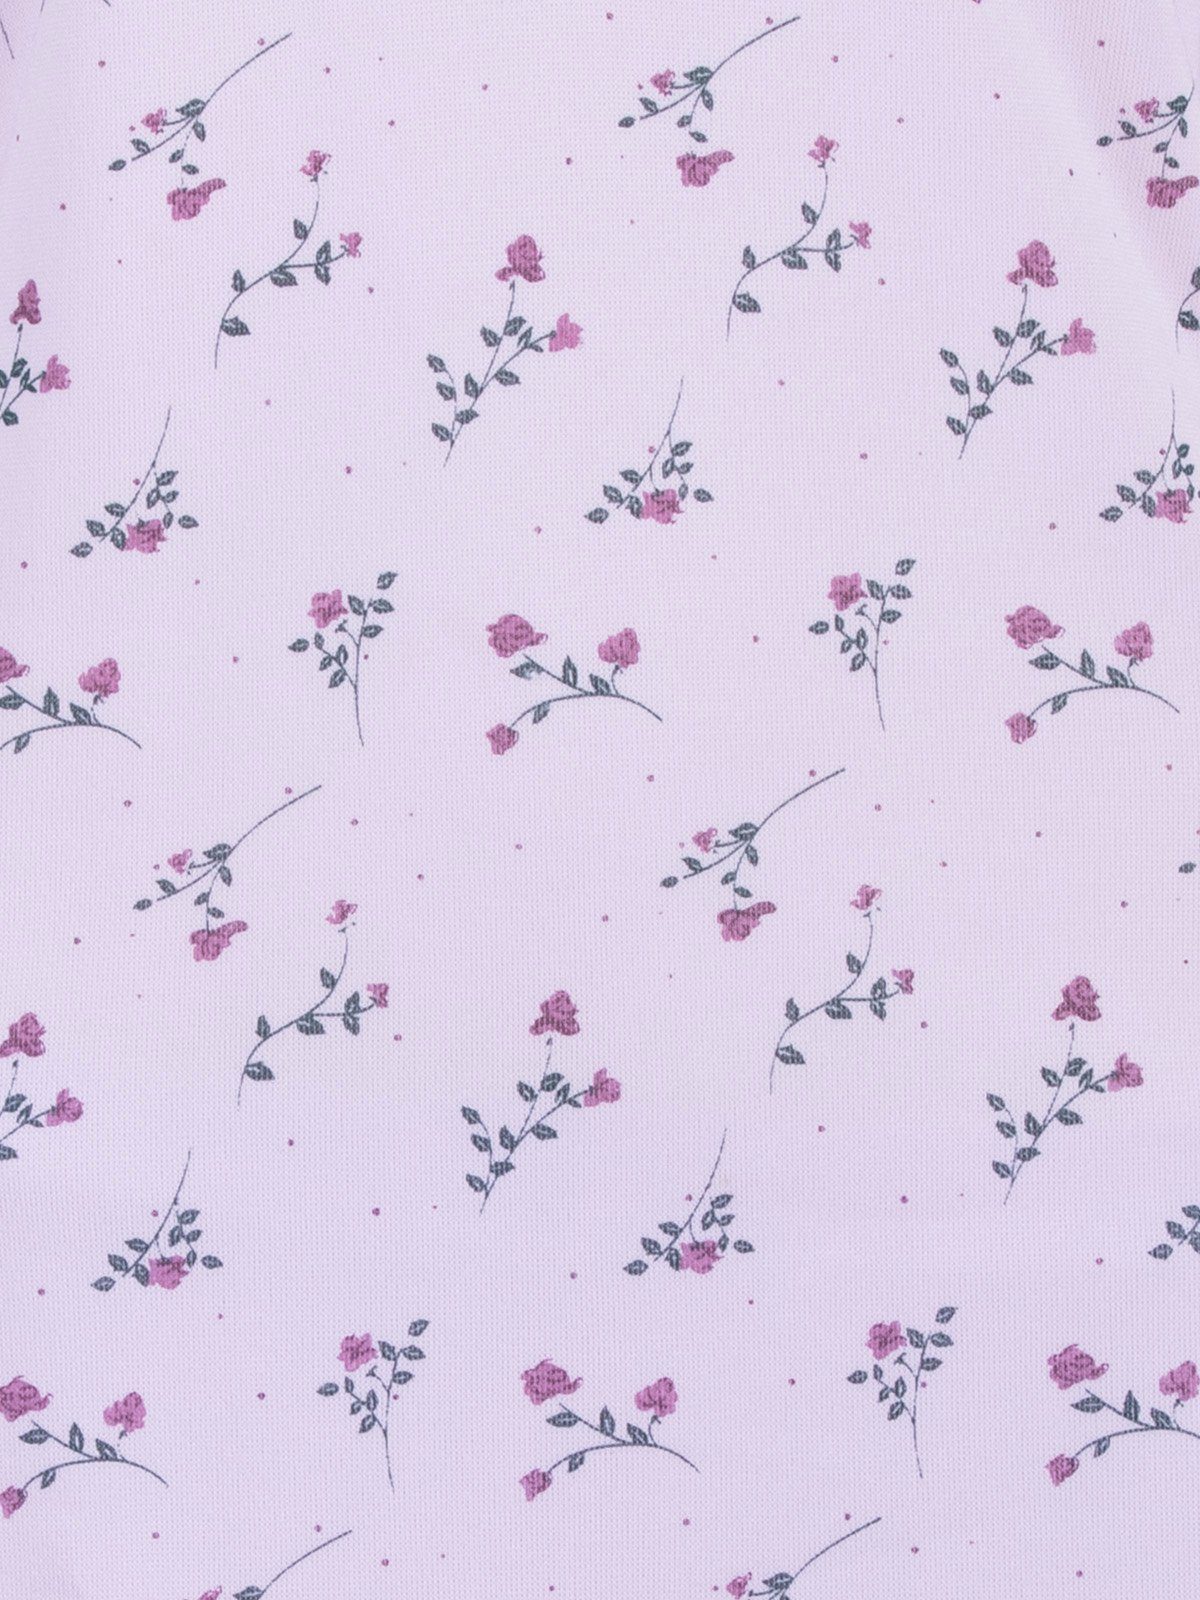 zeitlos Nachthemd Thermo Nachthemd Paspel rosa Blumen 